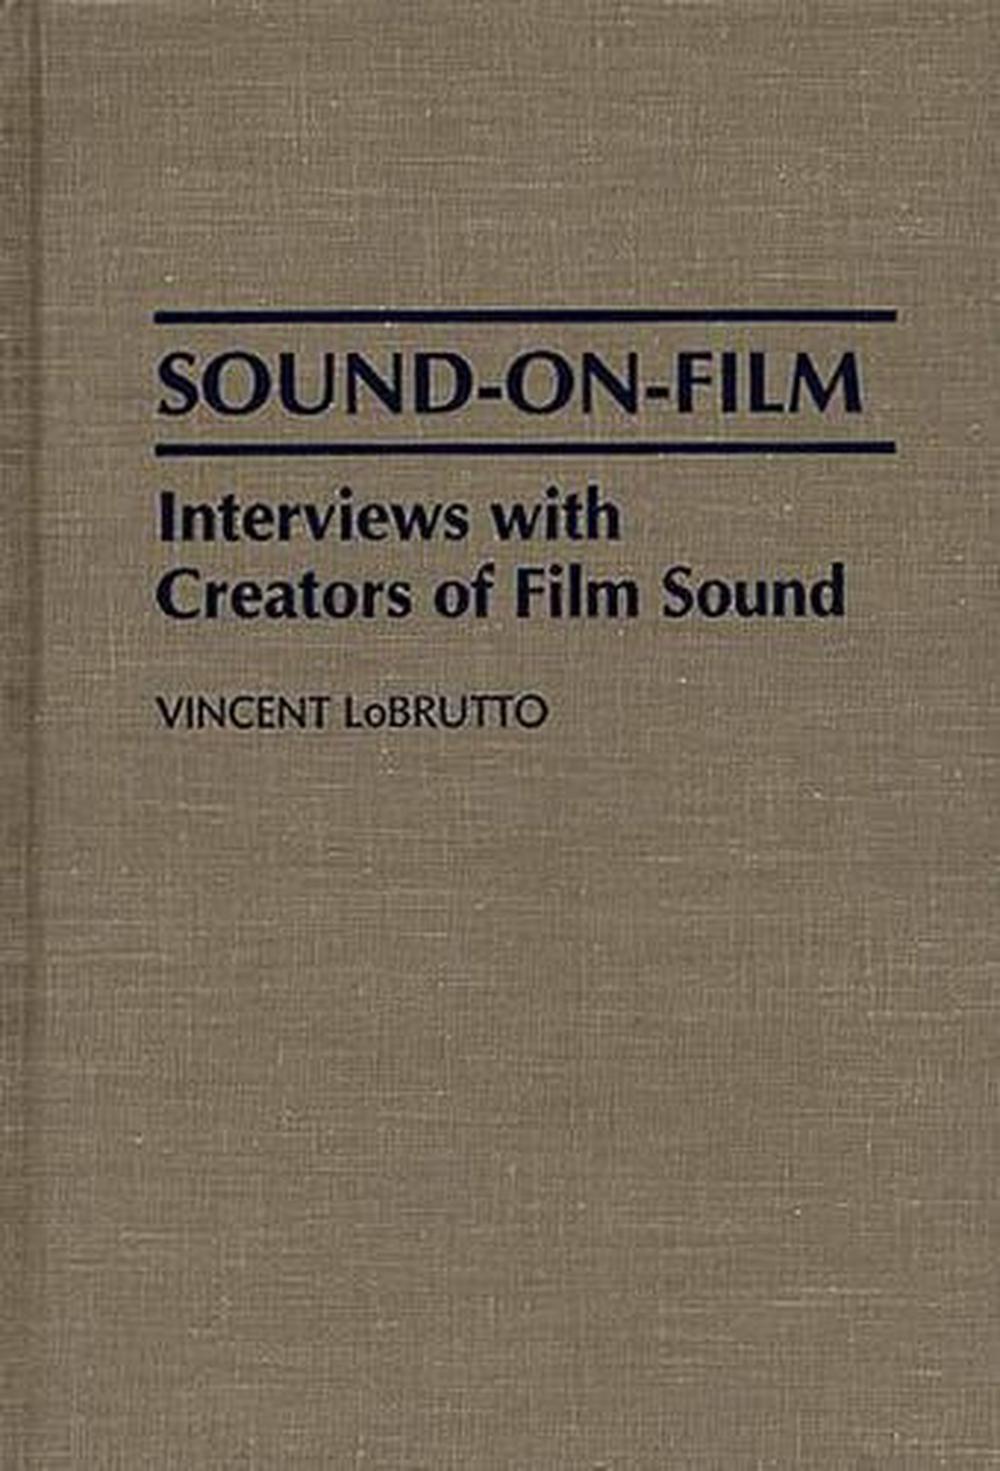 SoundOnFilm Interviews with Creators of Film Sound by Vincent